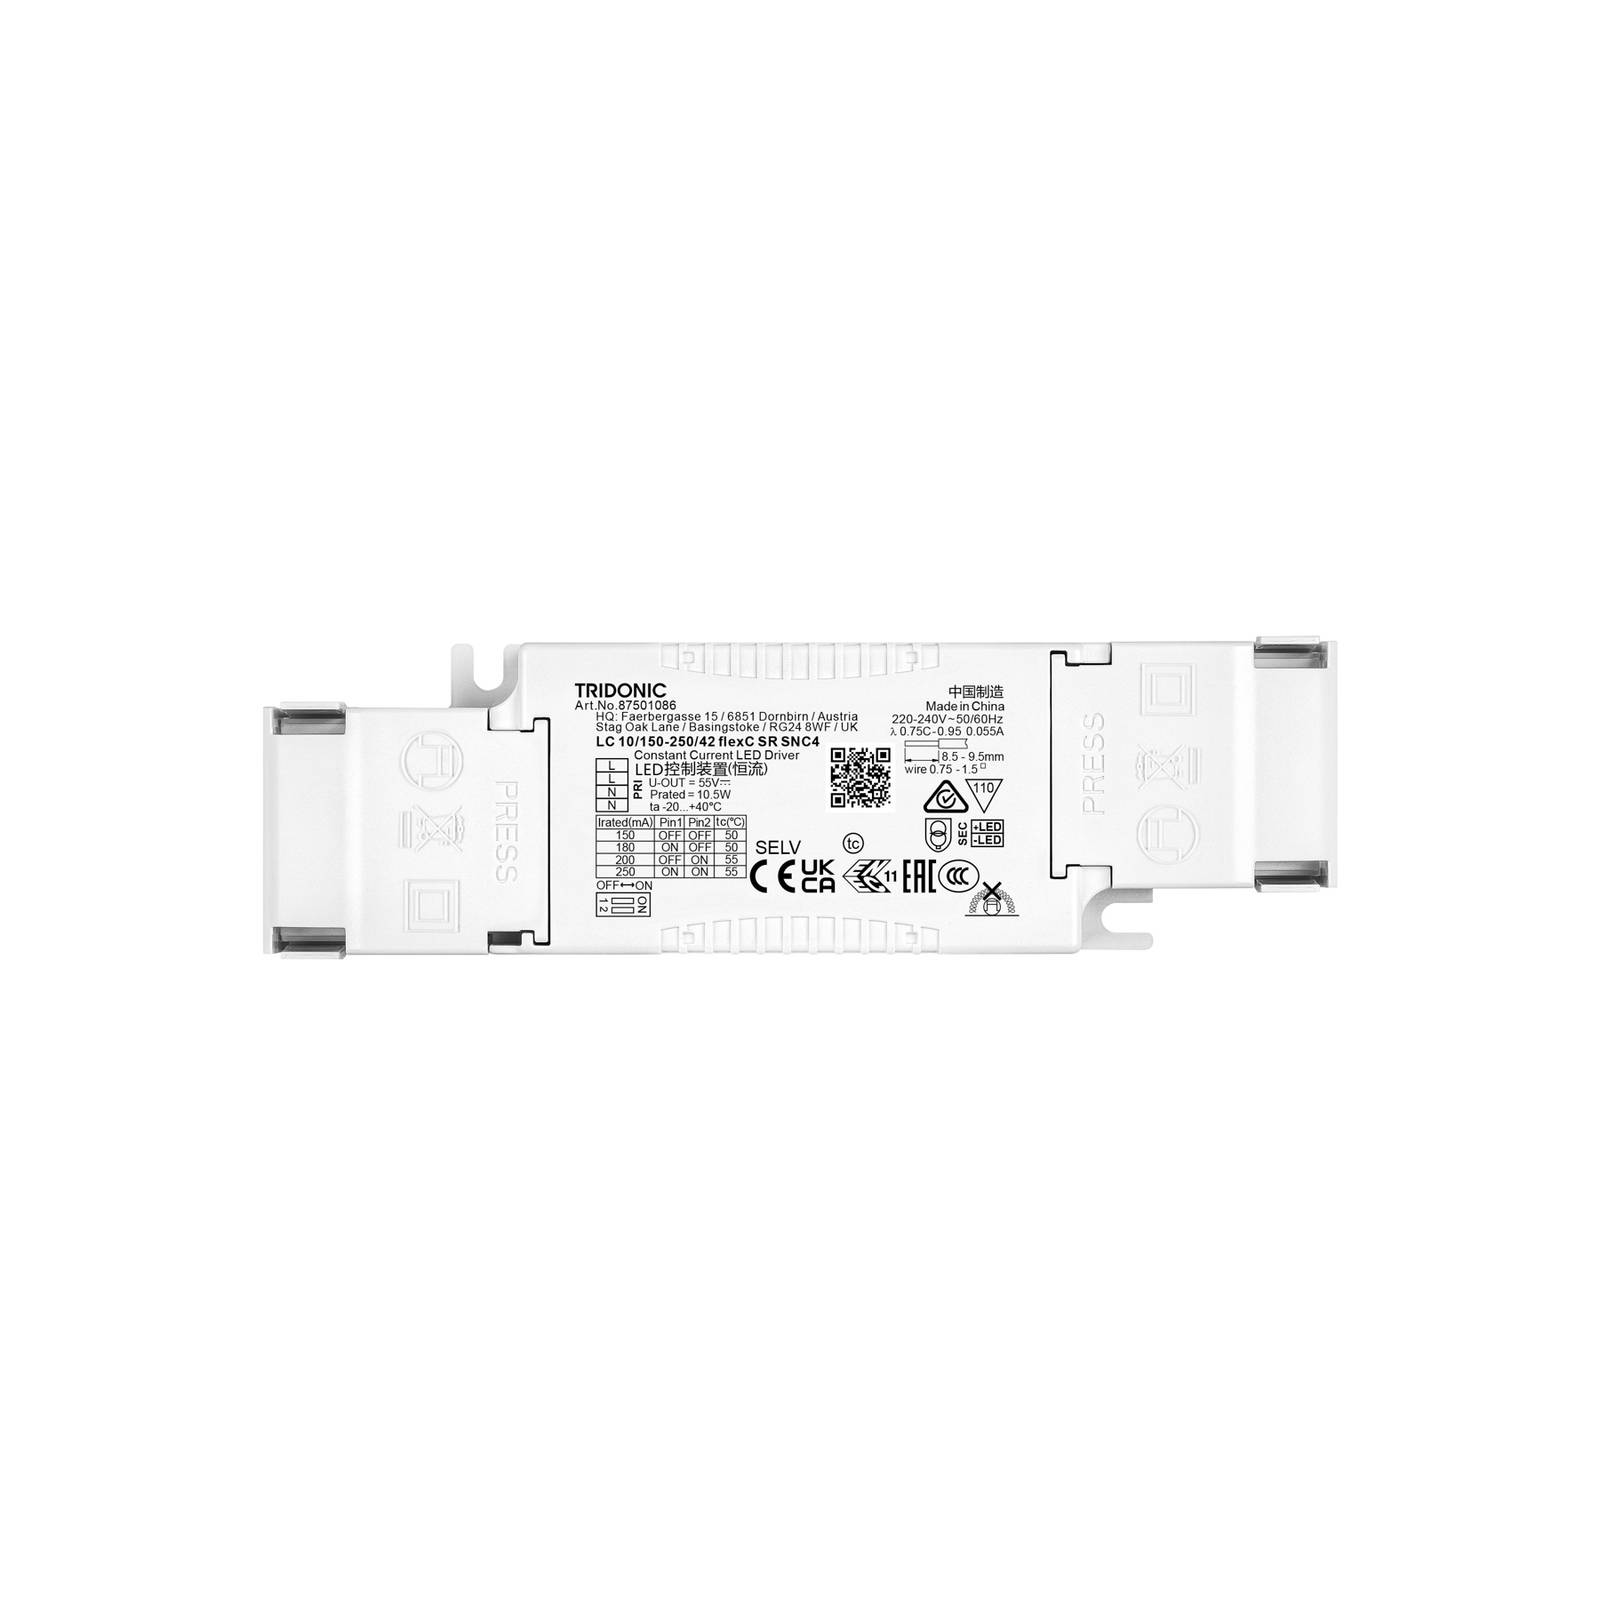 TRIDONIC Kompaktní LED ovladač TRIDONIC LC 10/150-250/42 flexC SR SNC4